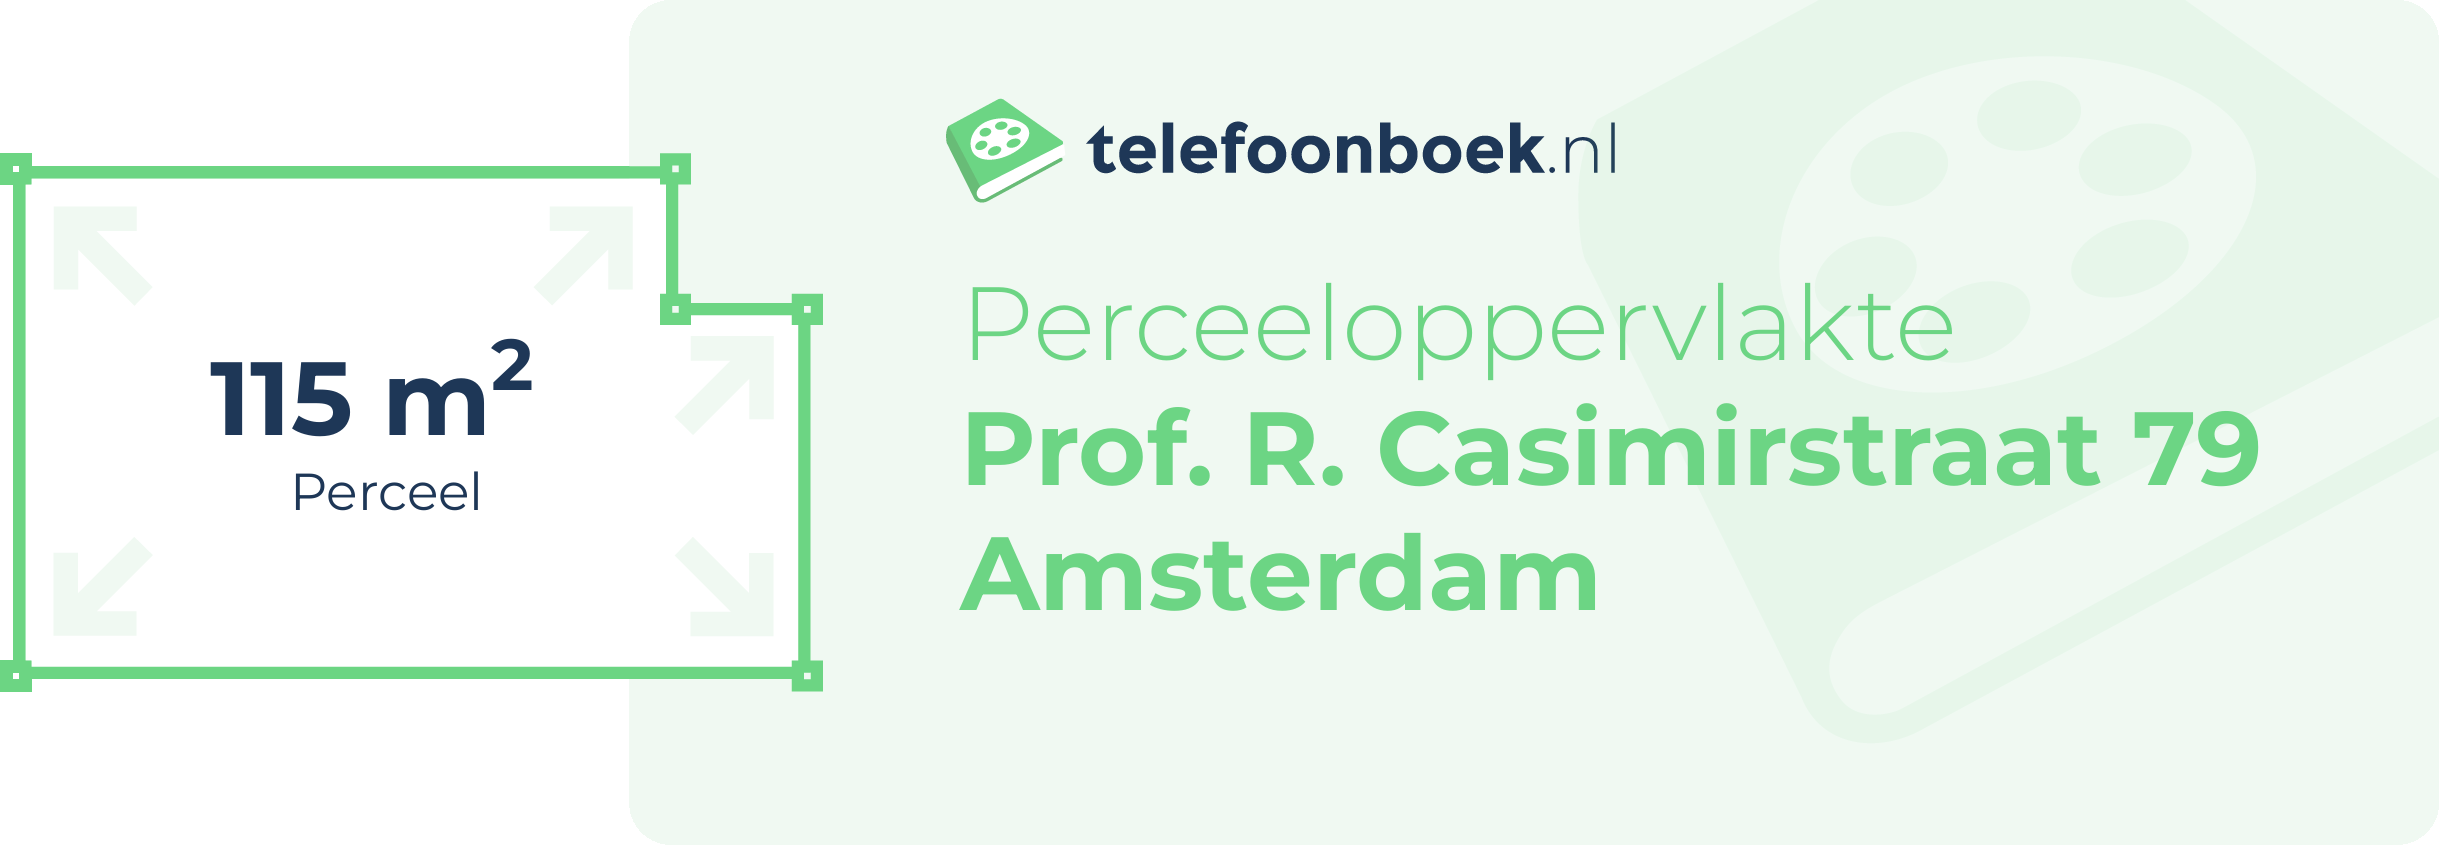 Perceeloppervlakte Prof. R. Casimirstraat 79 Amsterdam